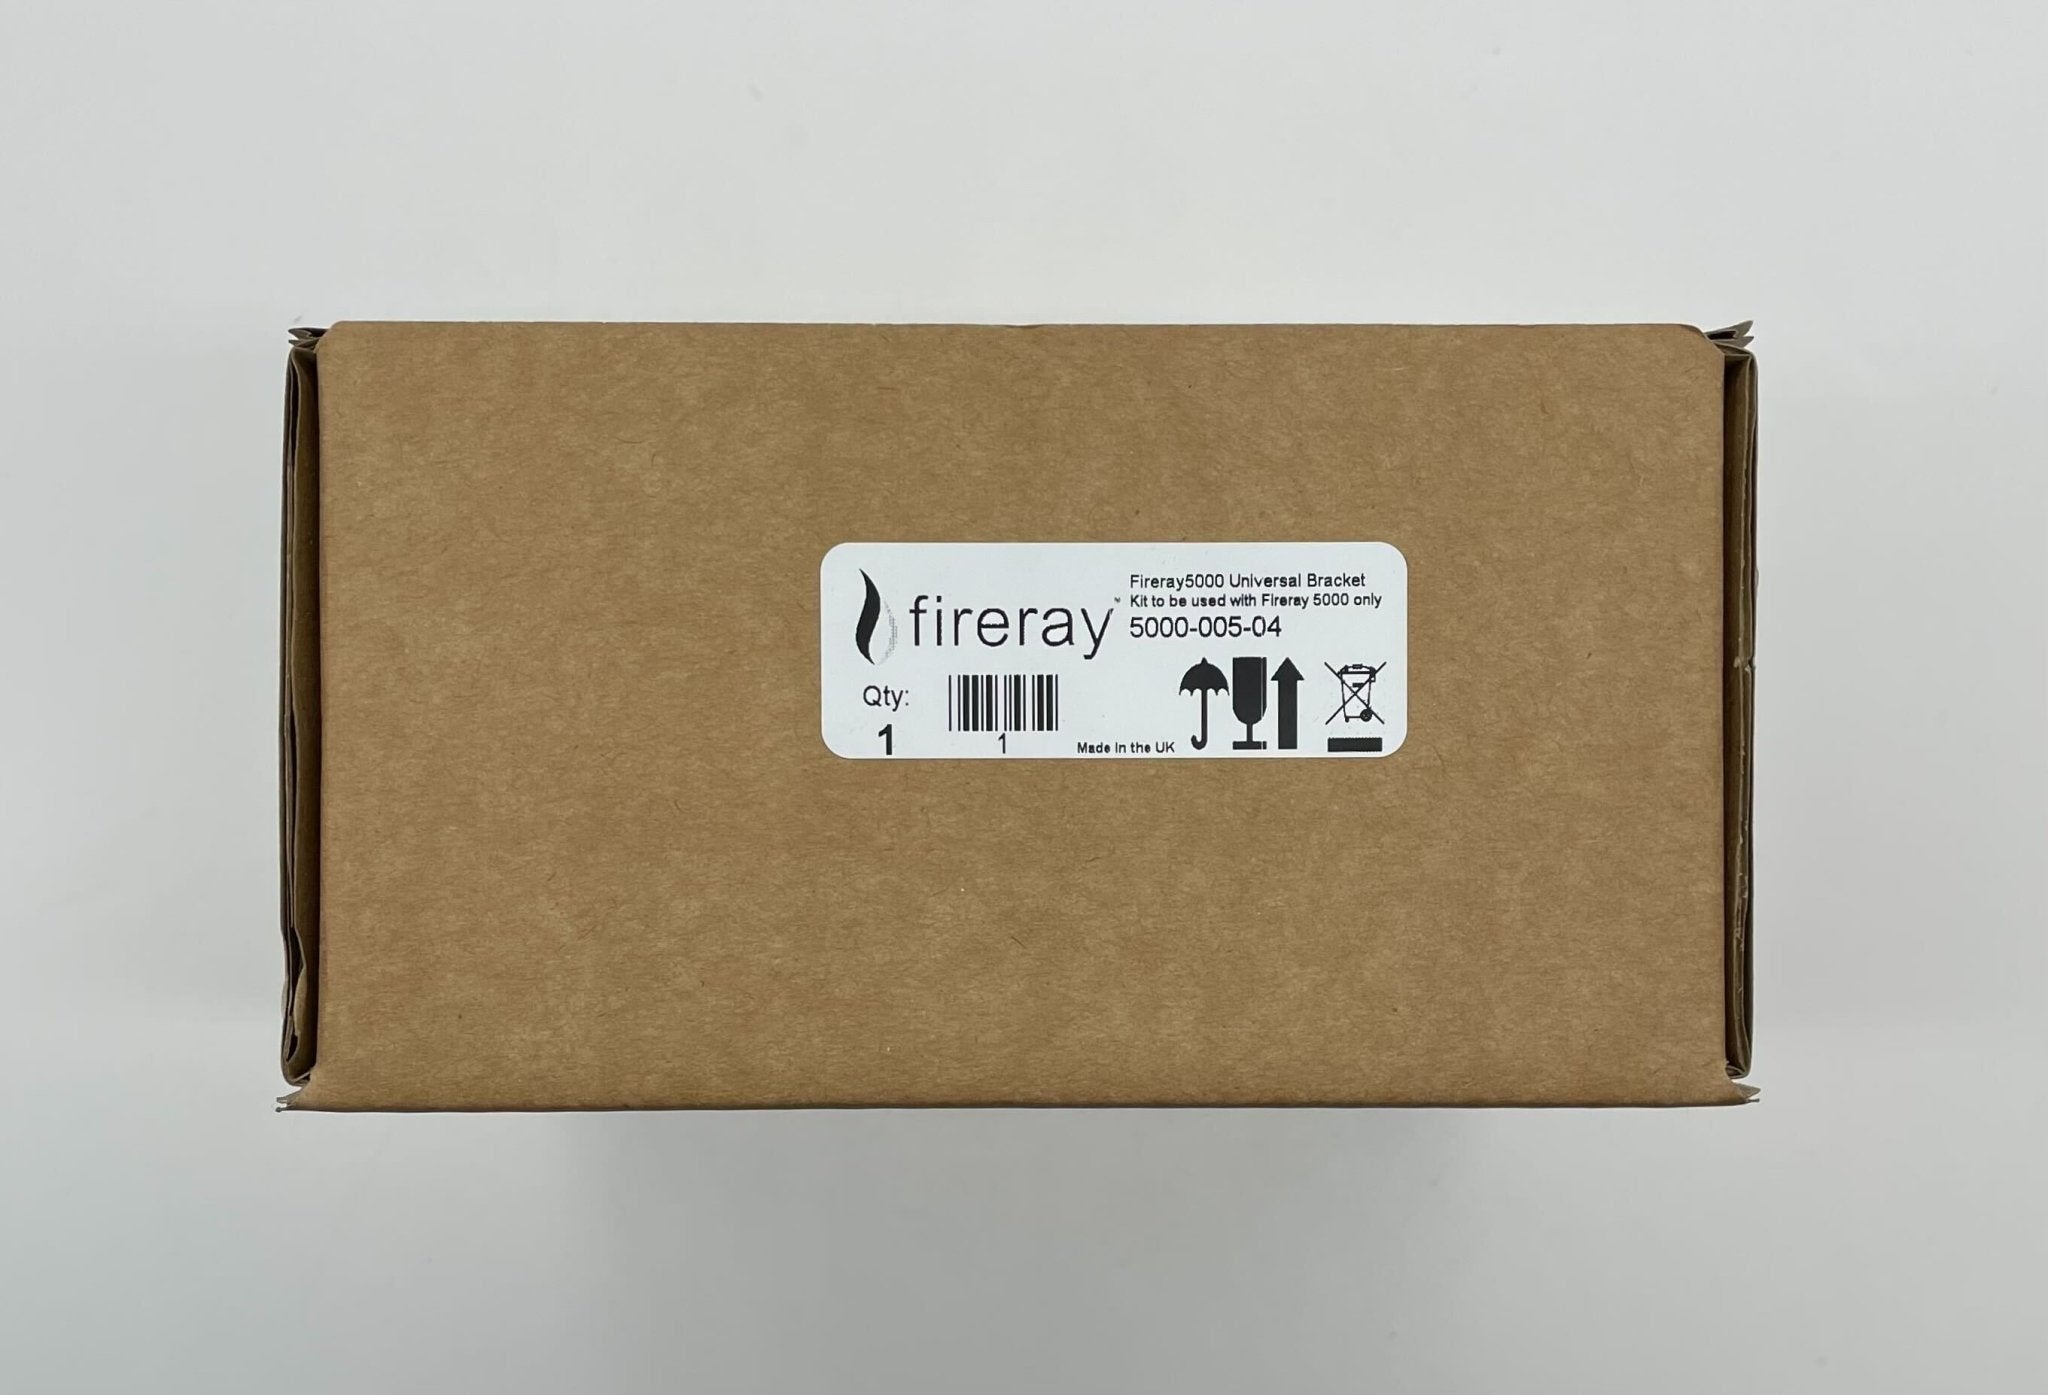 Fireray 5000-004 Long Range Prism Kit - The Fire Alarm Supplier